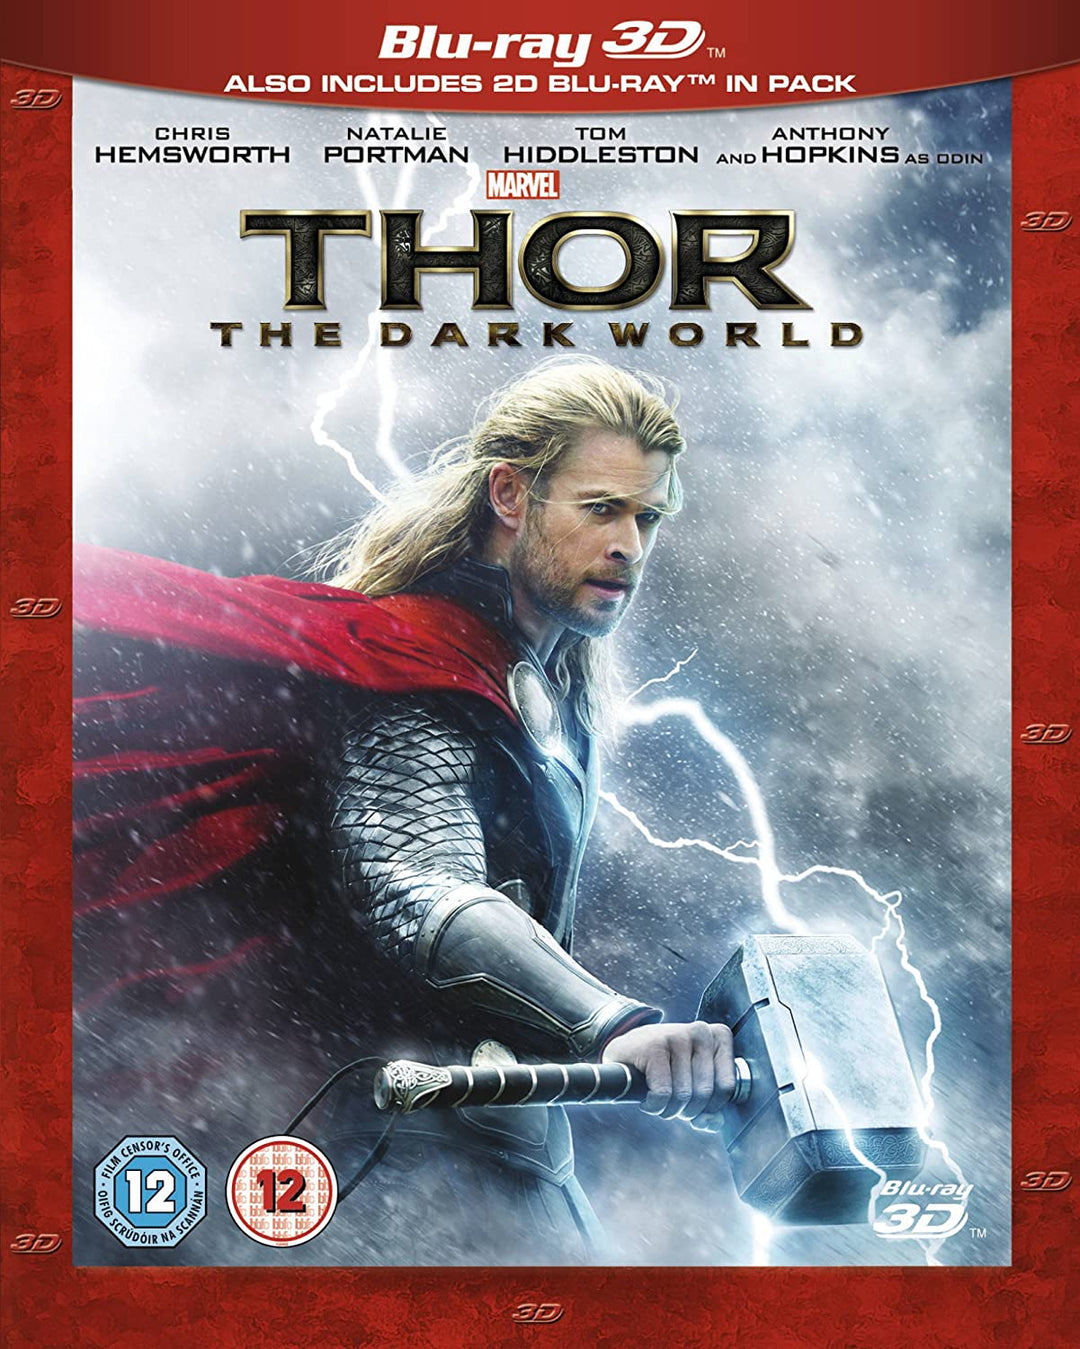 Thor: The Dark World - Action/Adventure [Blu-ray]